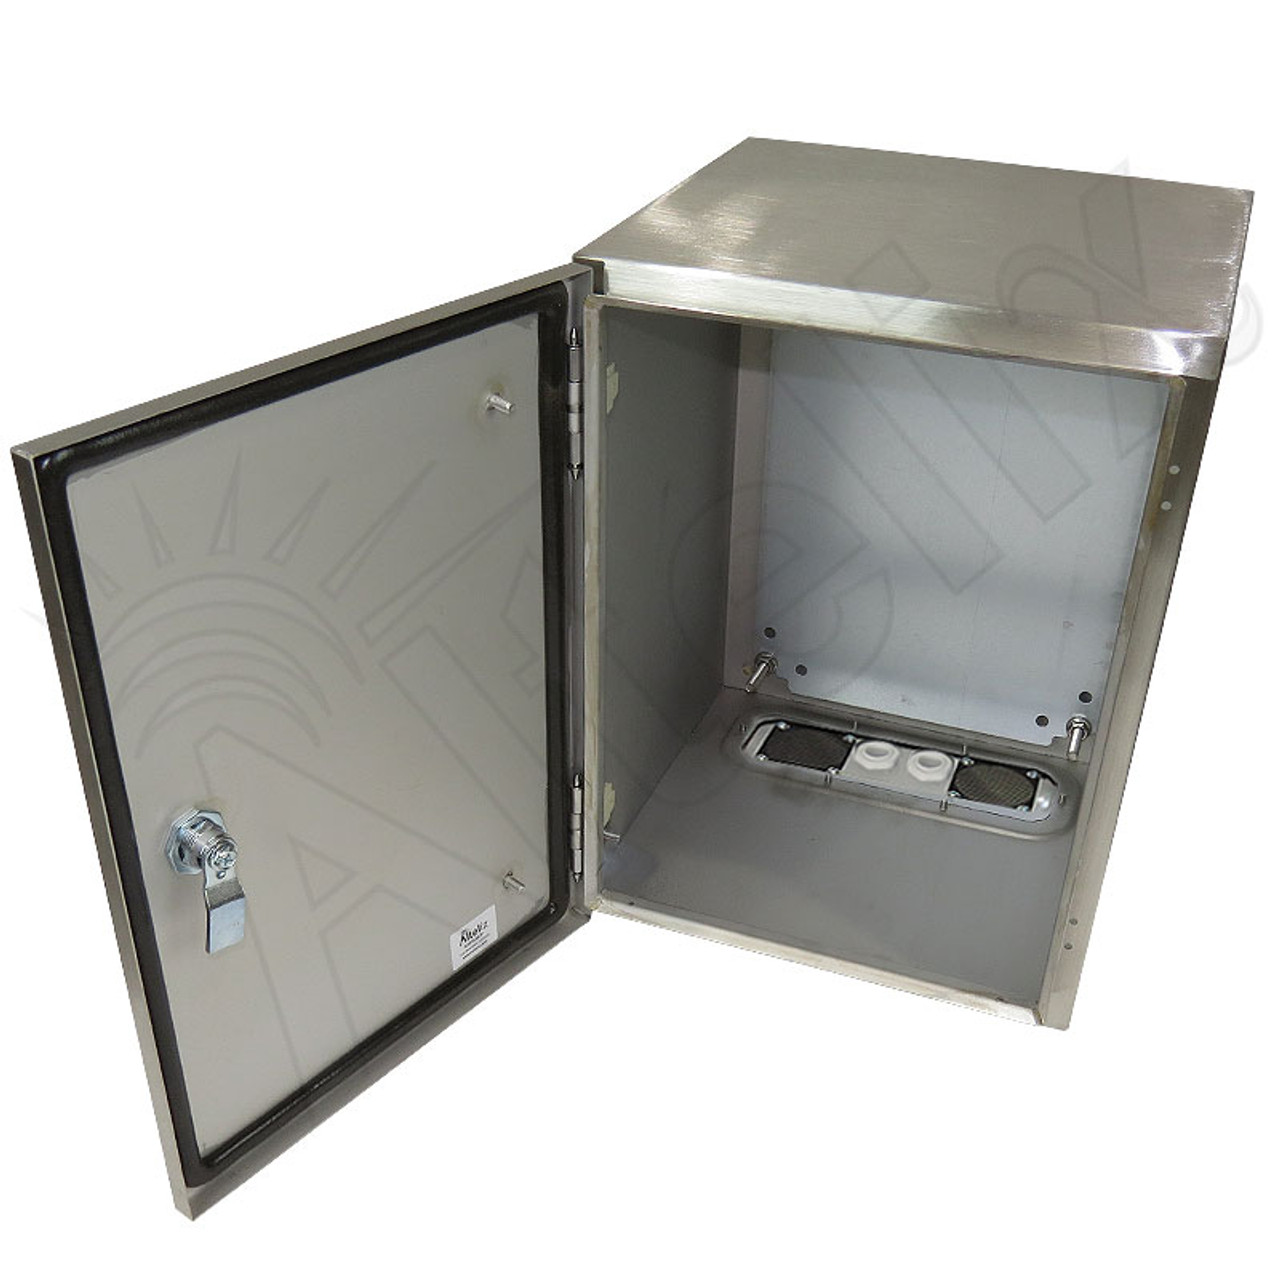 Altelix 12x9x7 PC+ABS Weatherproof Vented Utility Box NEMA Enclosure w